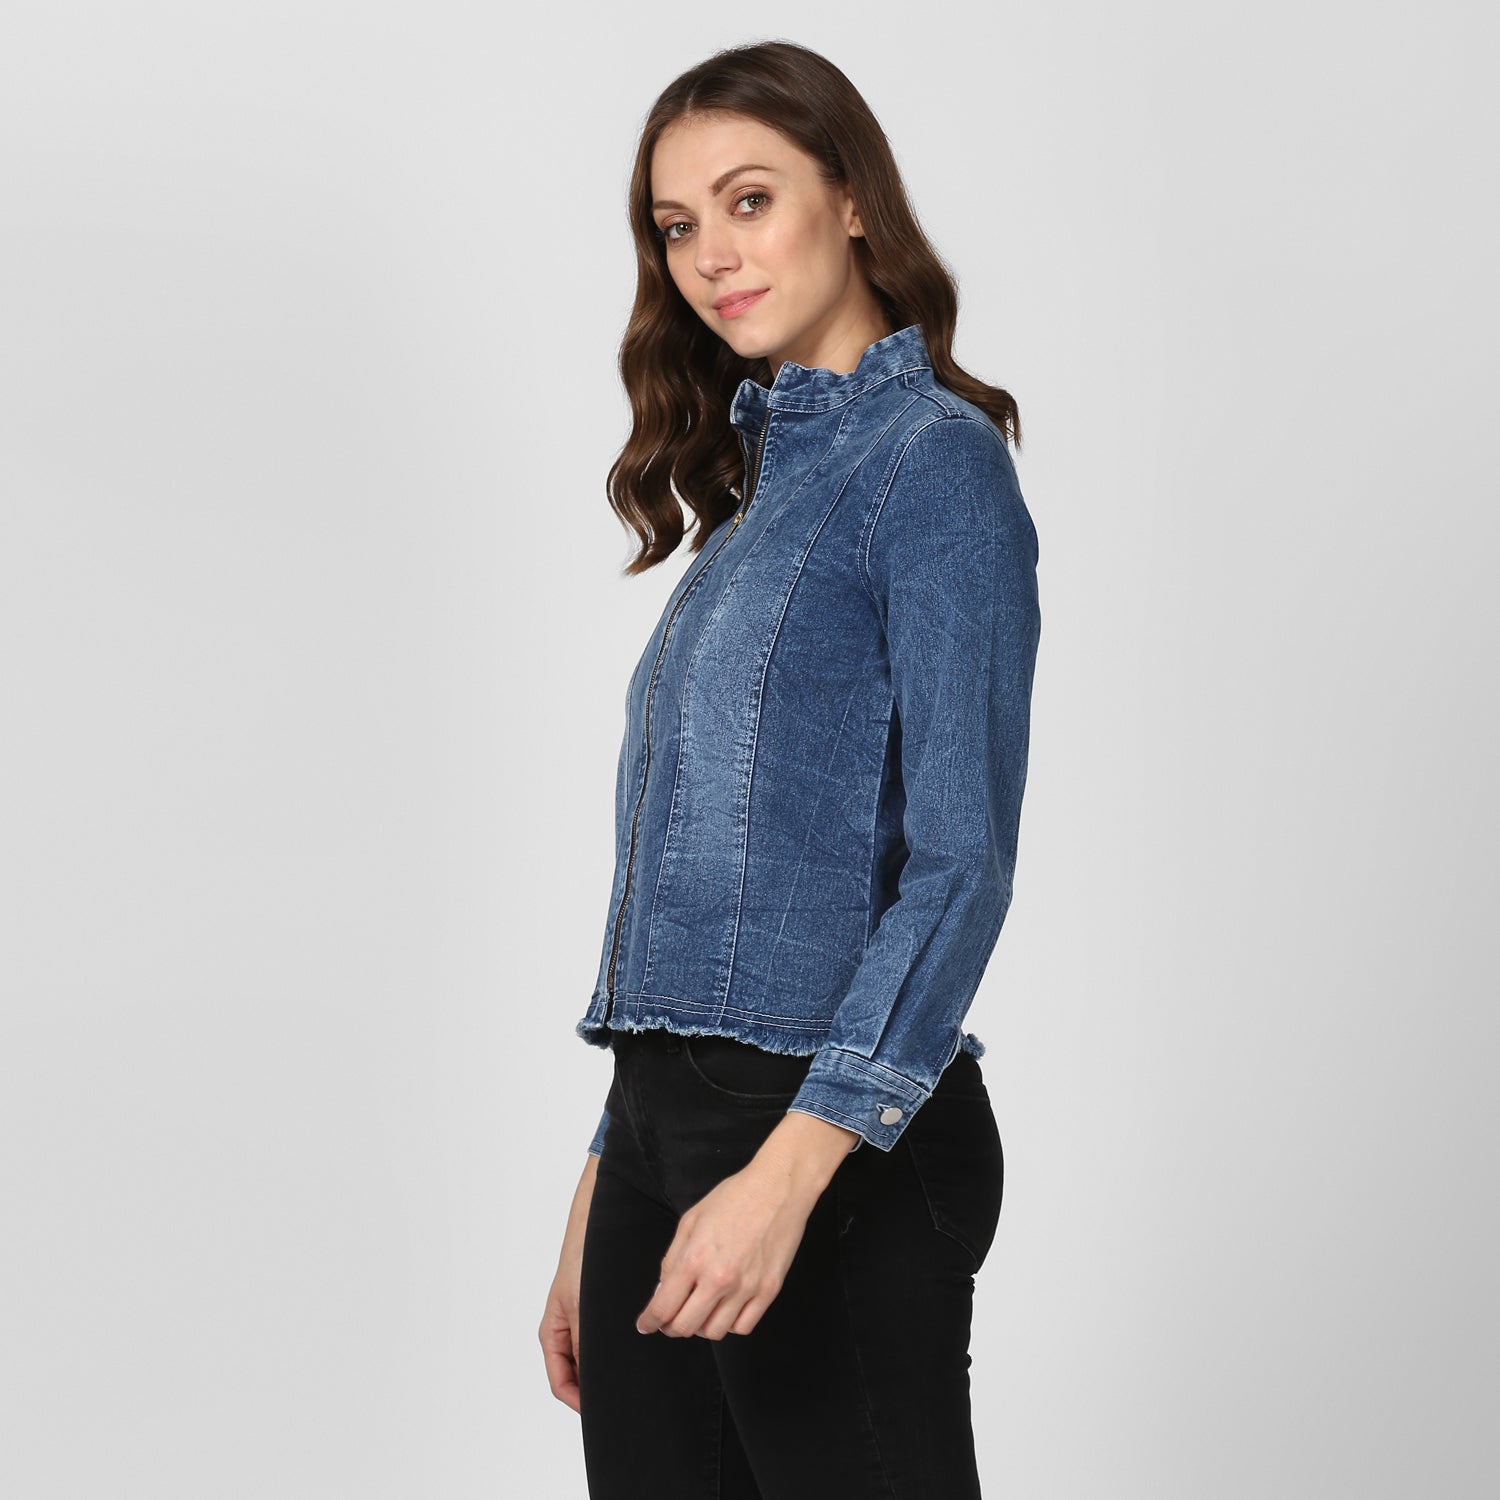 Women's Blue Denim Jacket with Zip - StyleStone